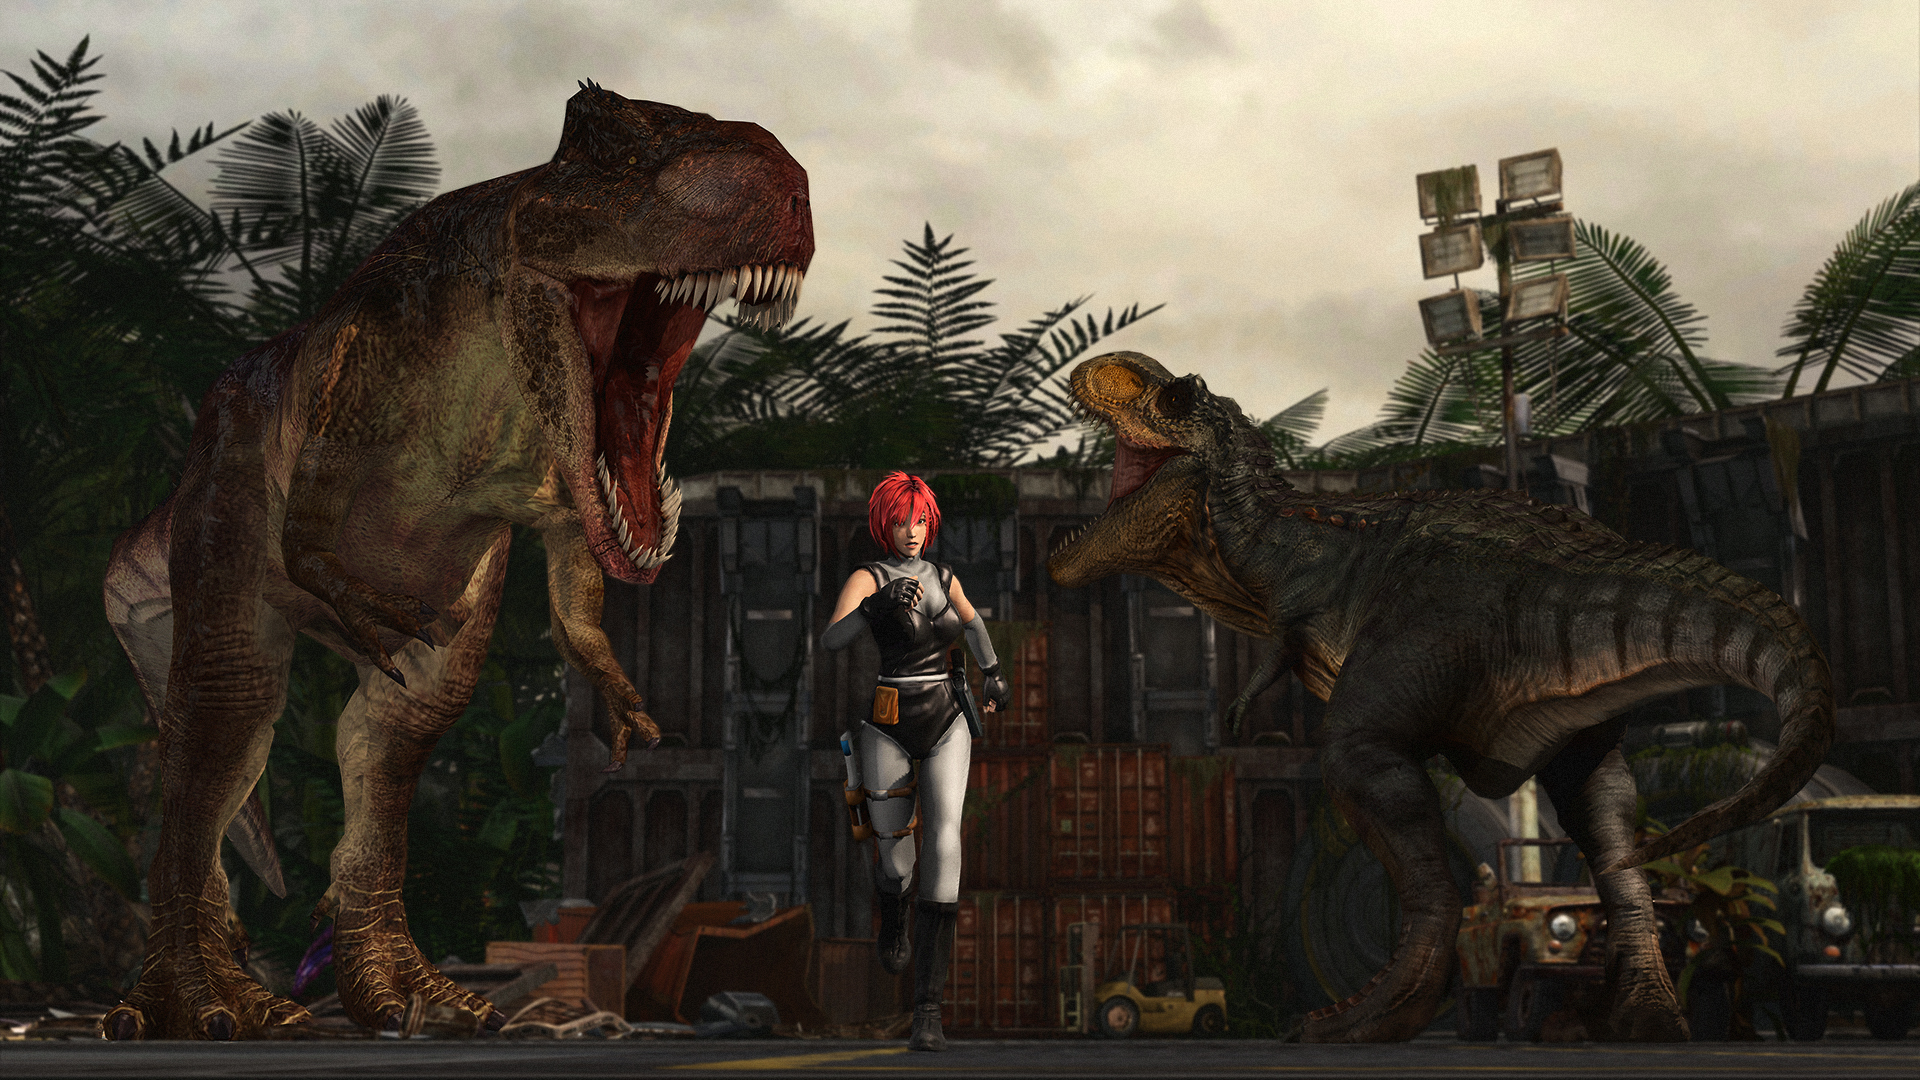 Dino Crisis 2 by Avalon Interactive